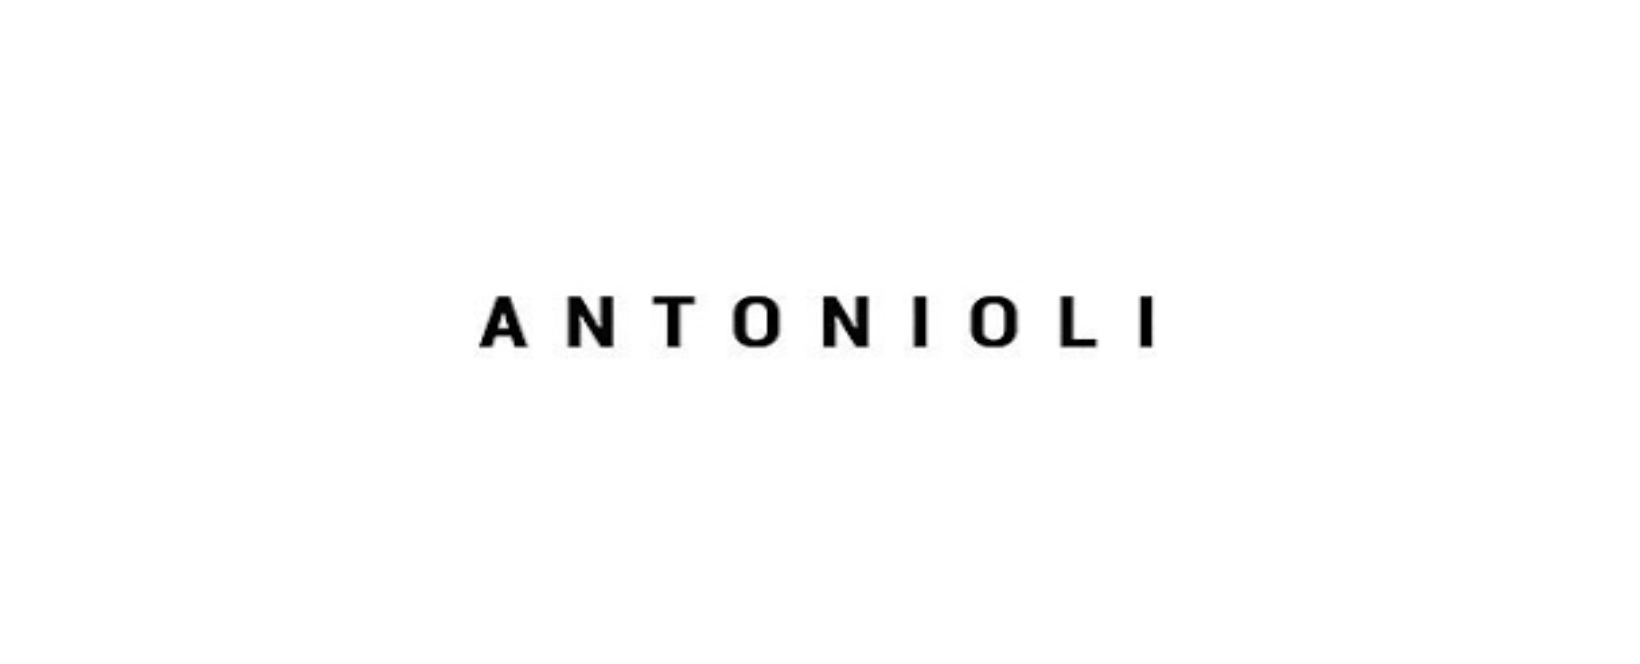 Antonioli Discount Code 2022